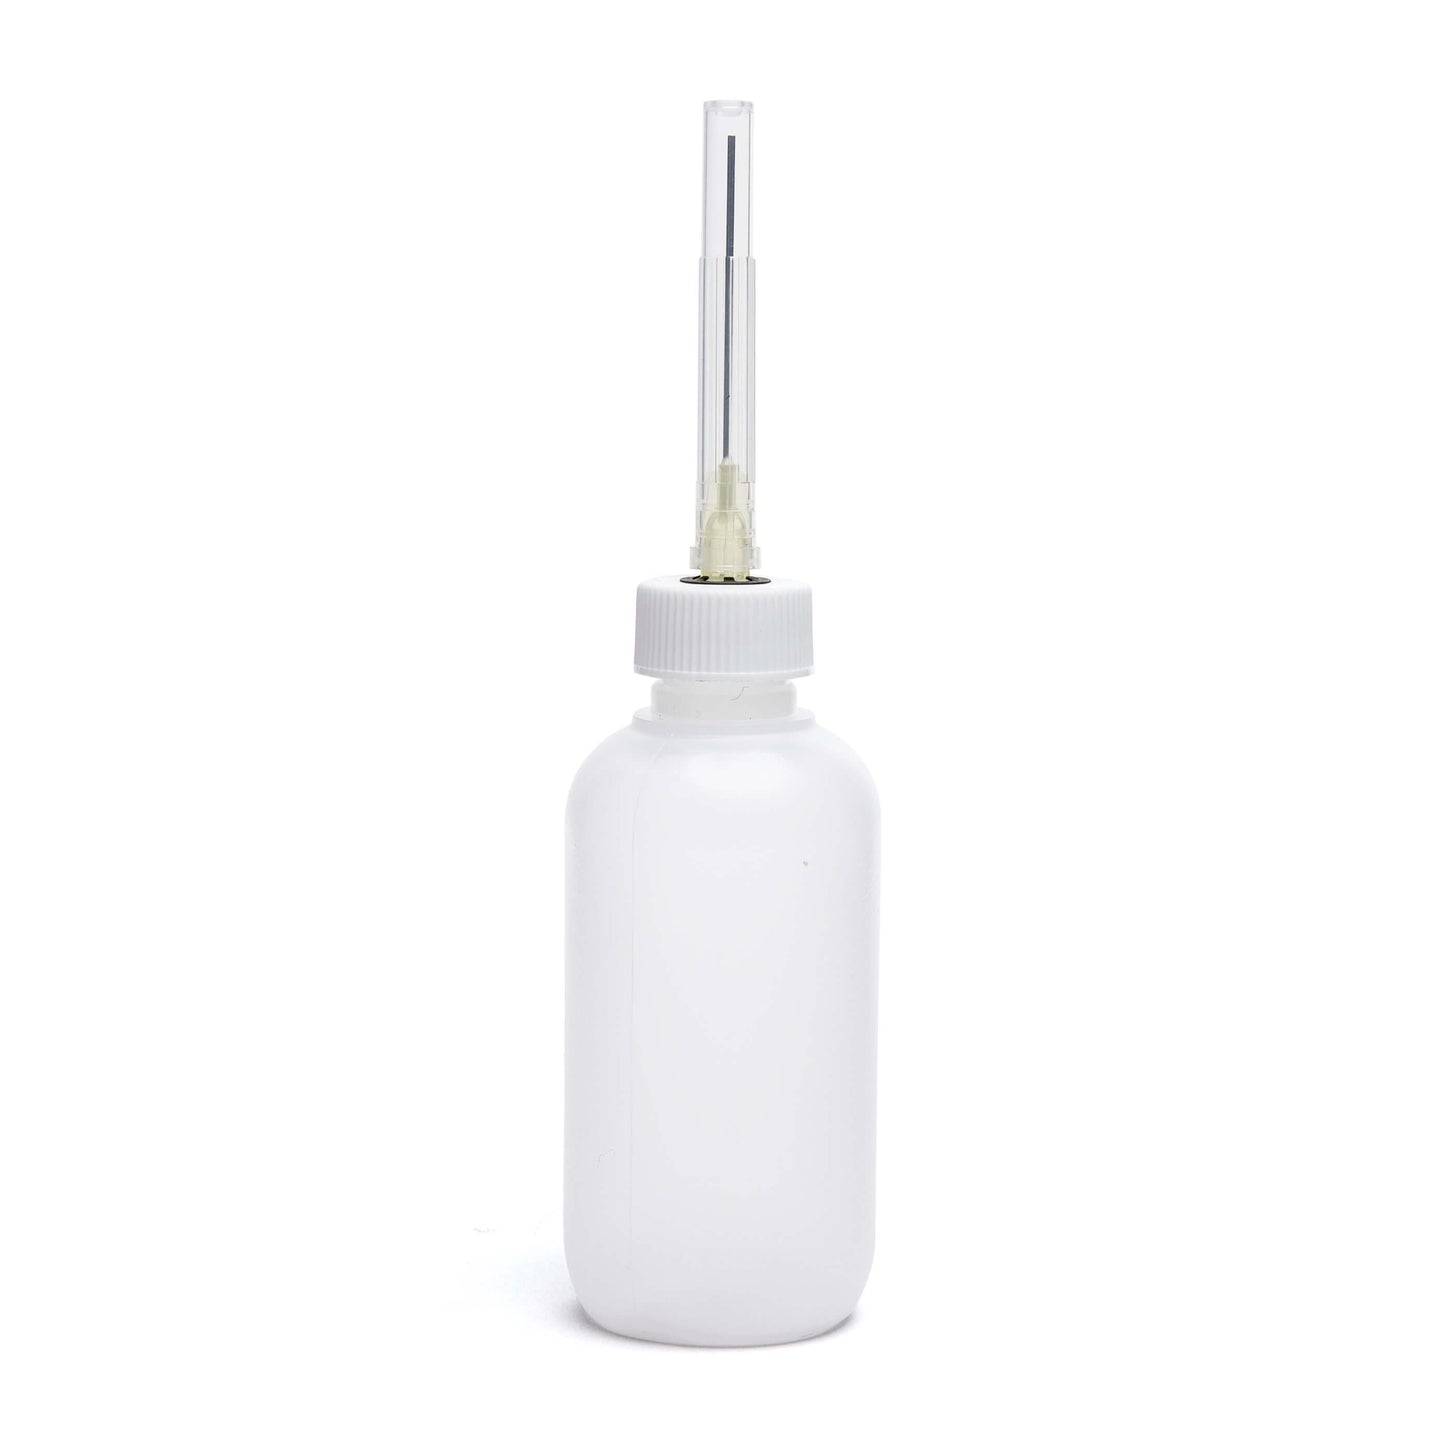 Applicator Bottle Squeeze Dispensers - Round Bottle - 20ga x 1-1/2" Needle